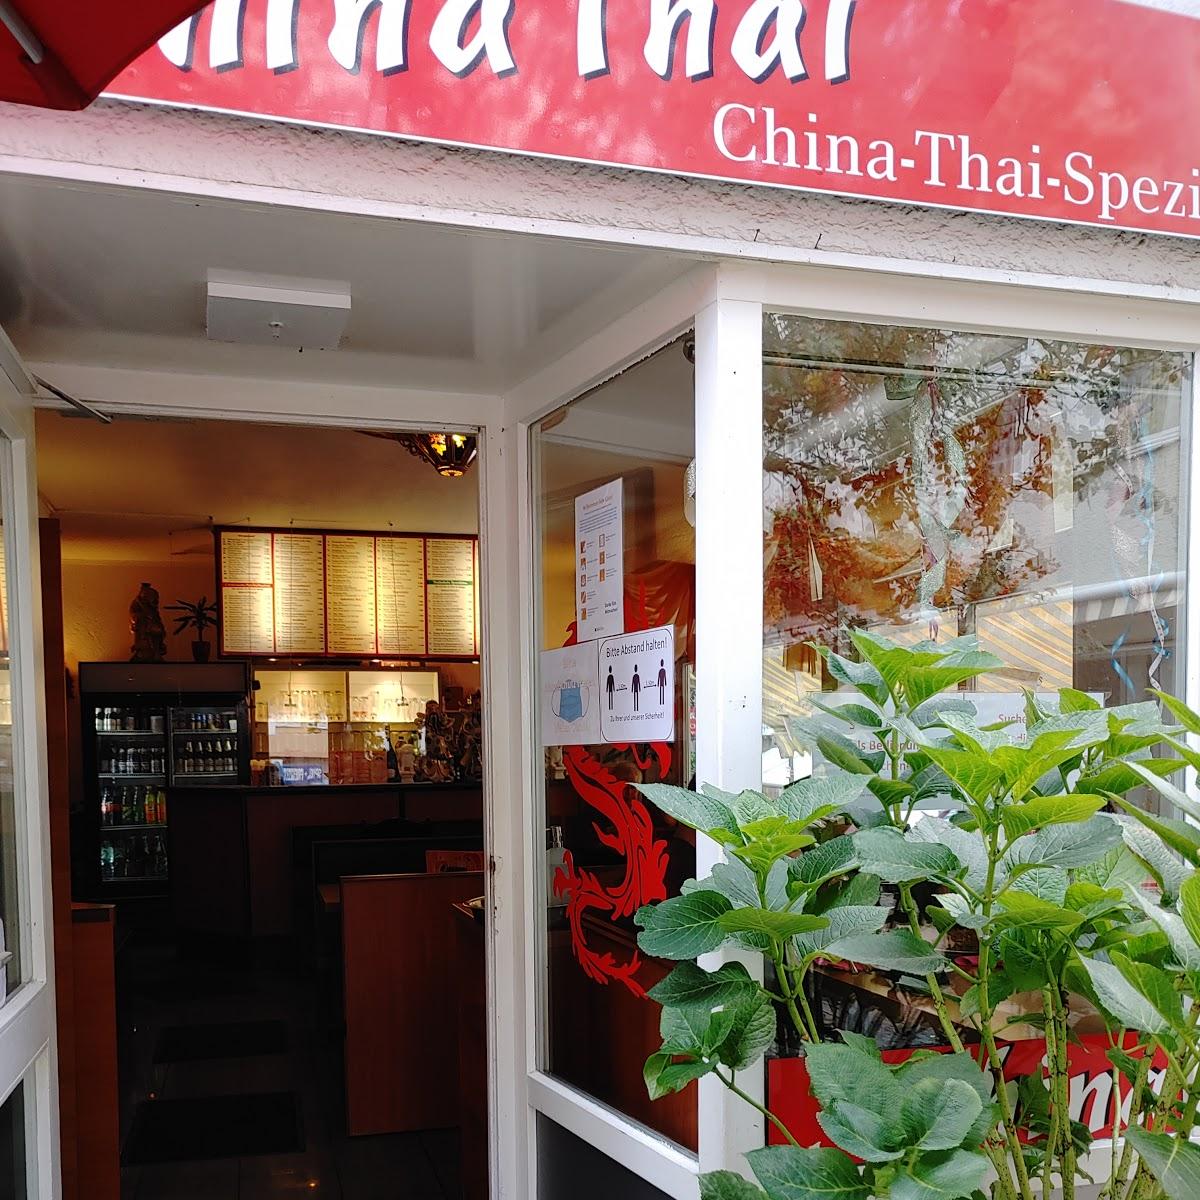 Restaurant "China-Thai-Imbiss" in Backnang